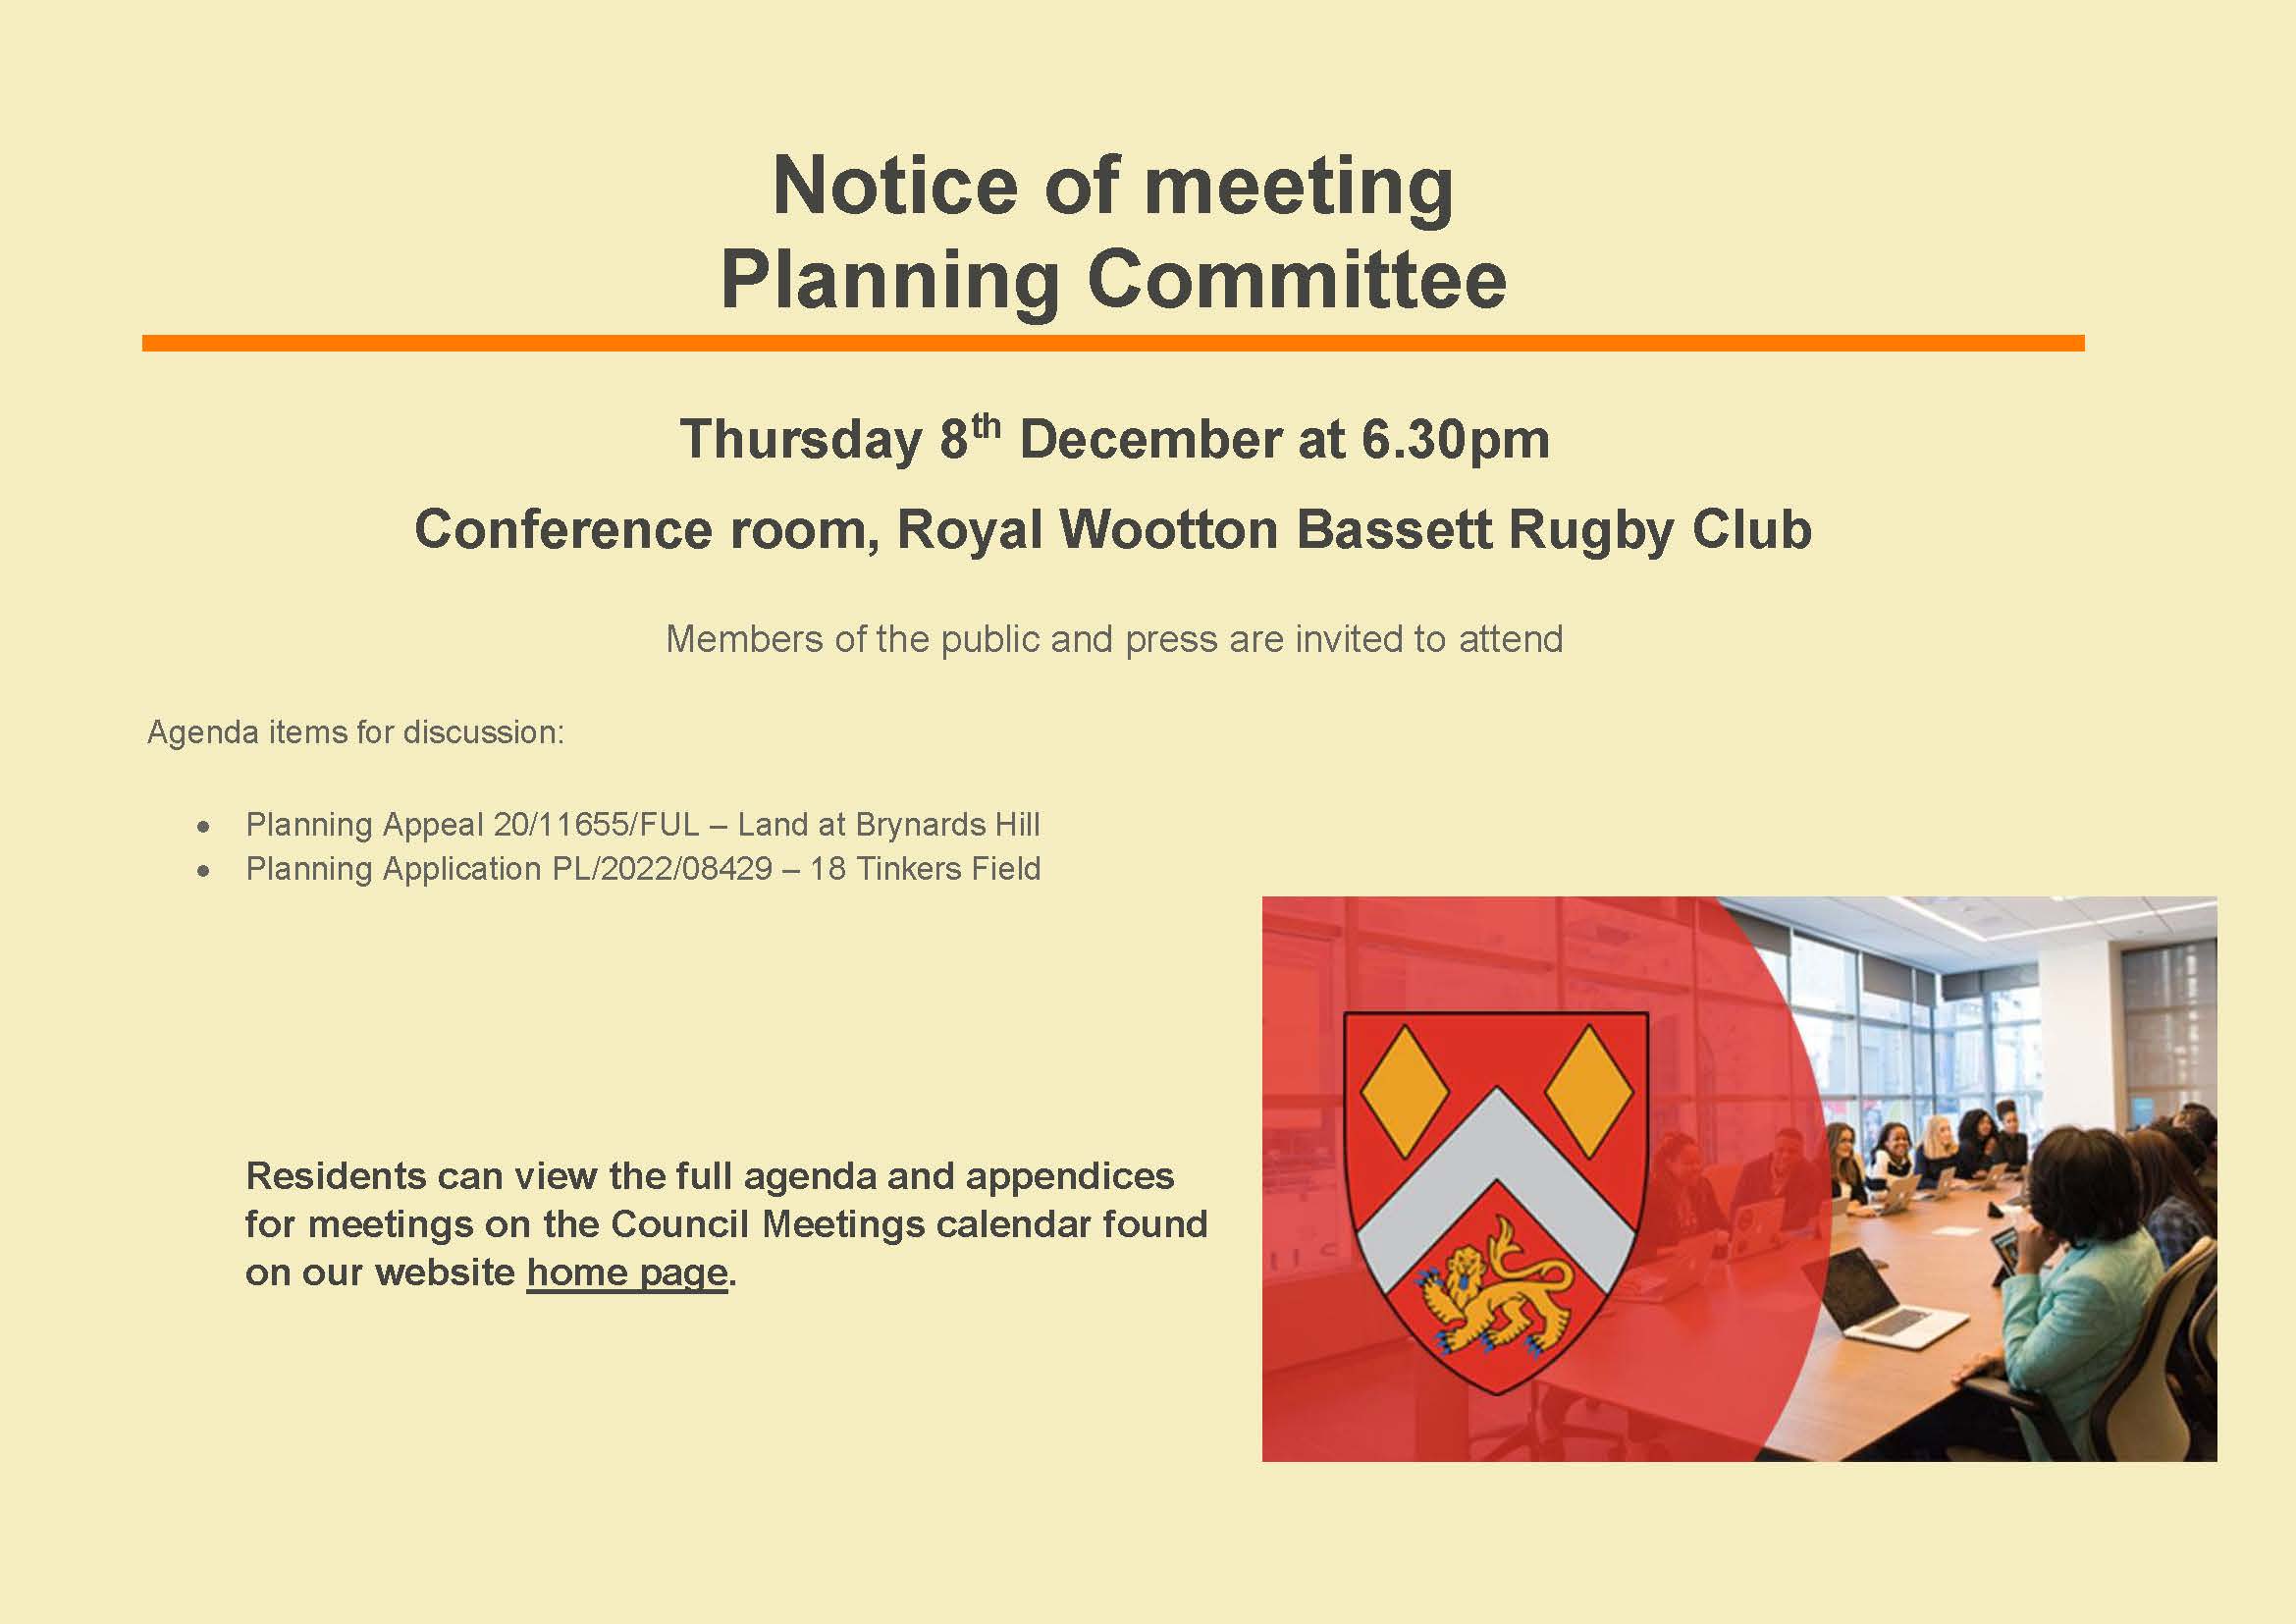 Notice of Planning Meeting